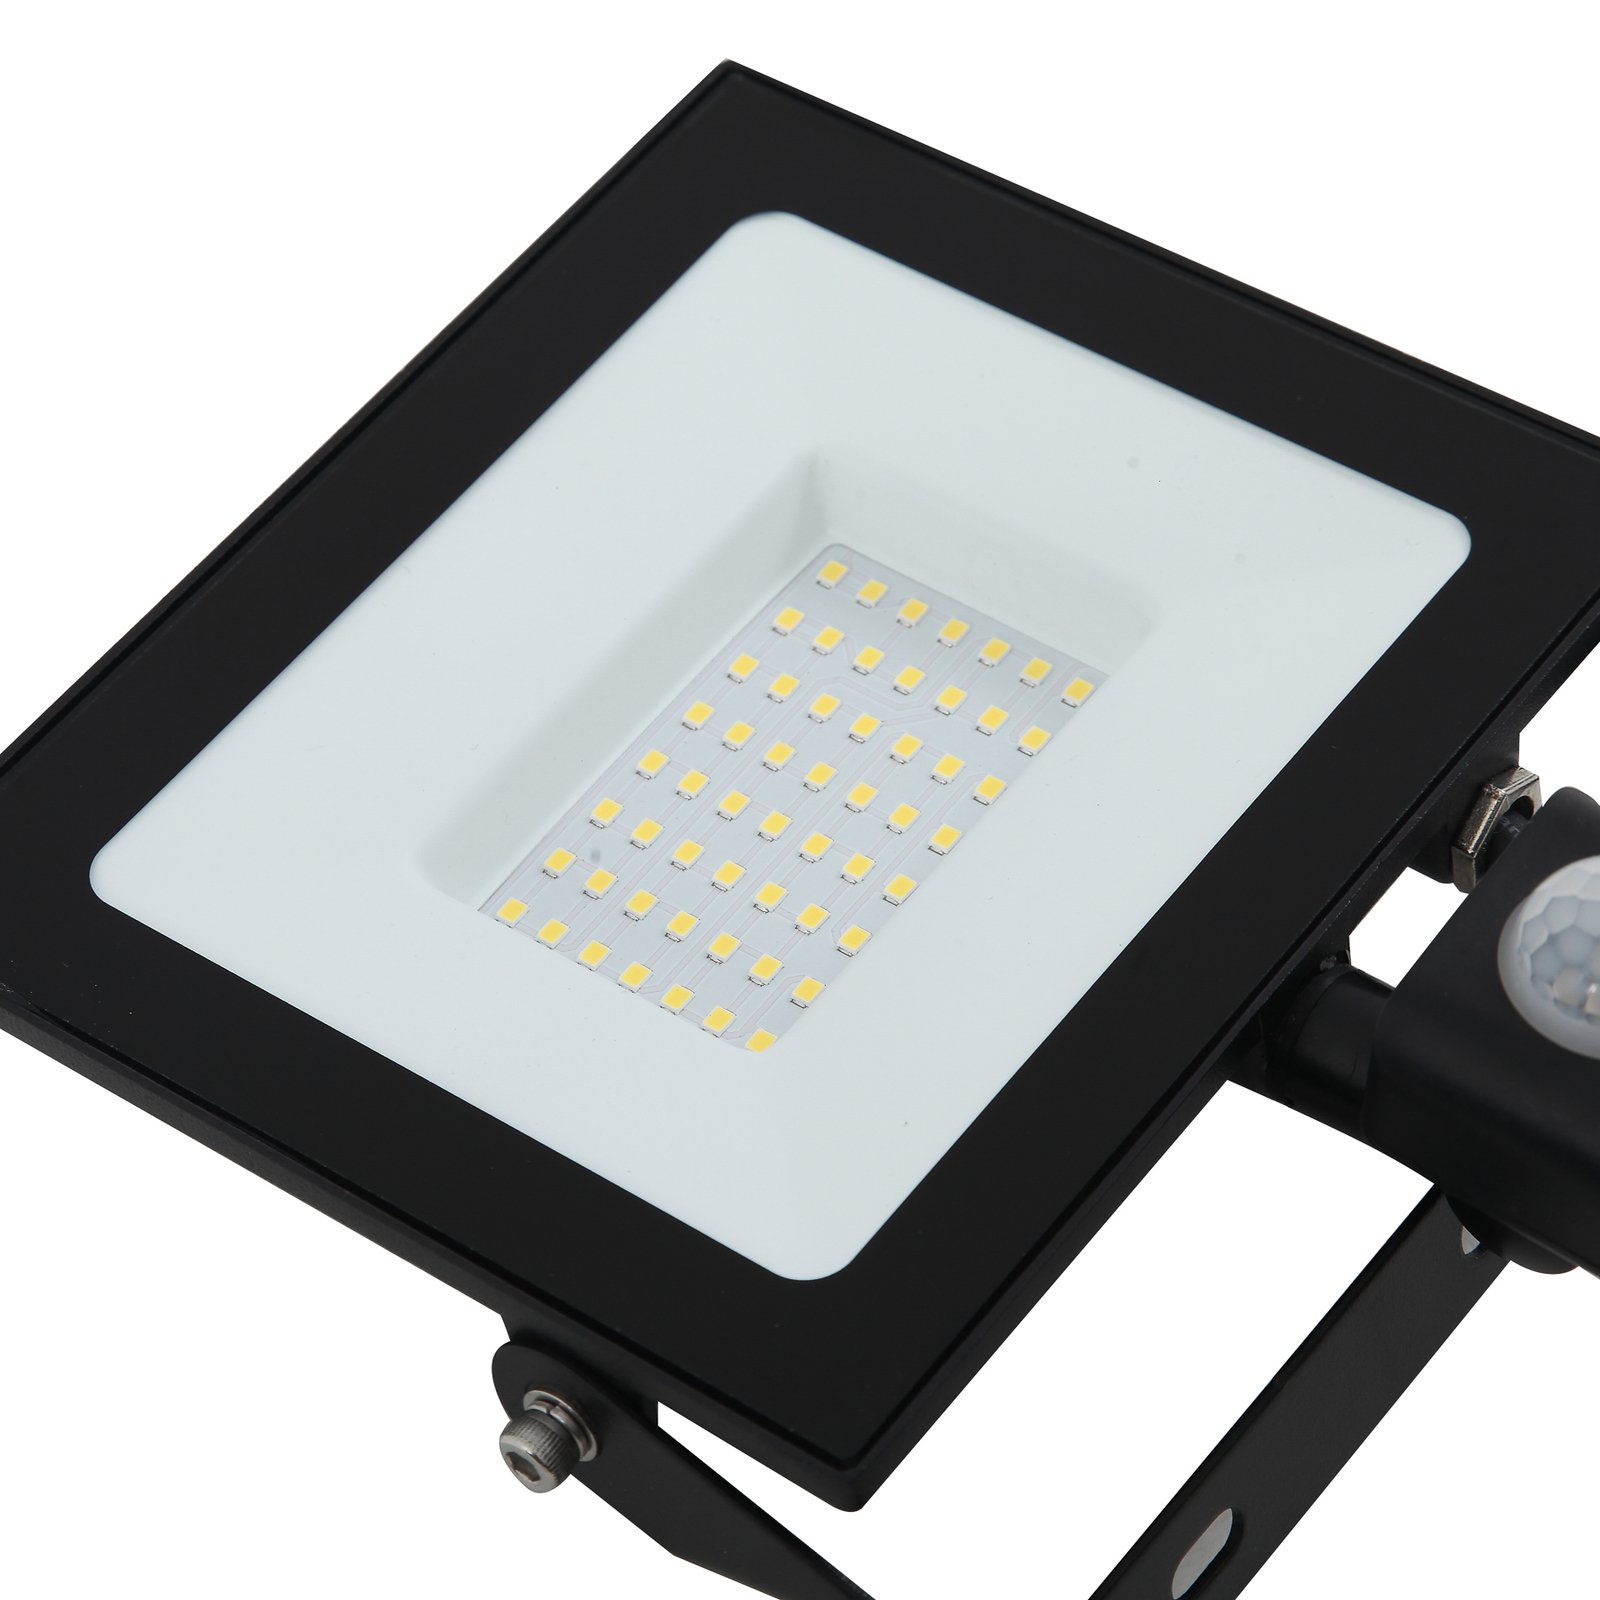 Prios LED lumina reflectoarelor de exterior Maikel, 50W, 4000lm, aluminiu,